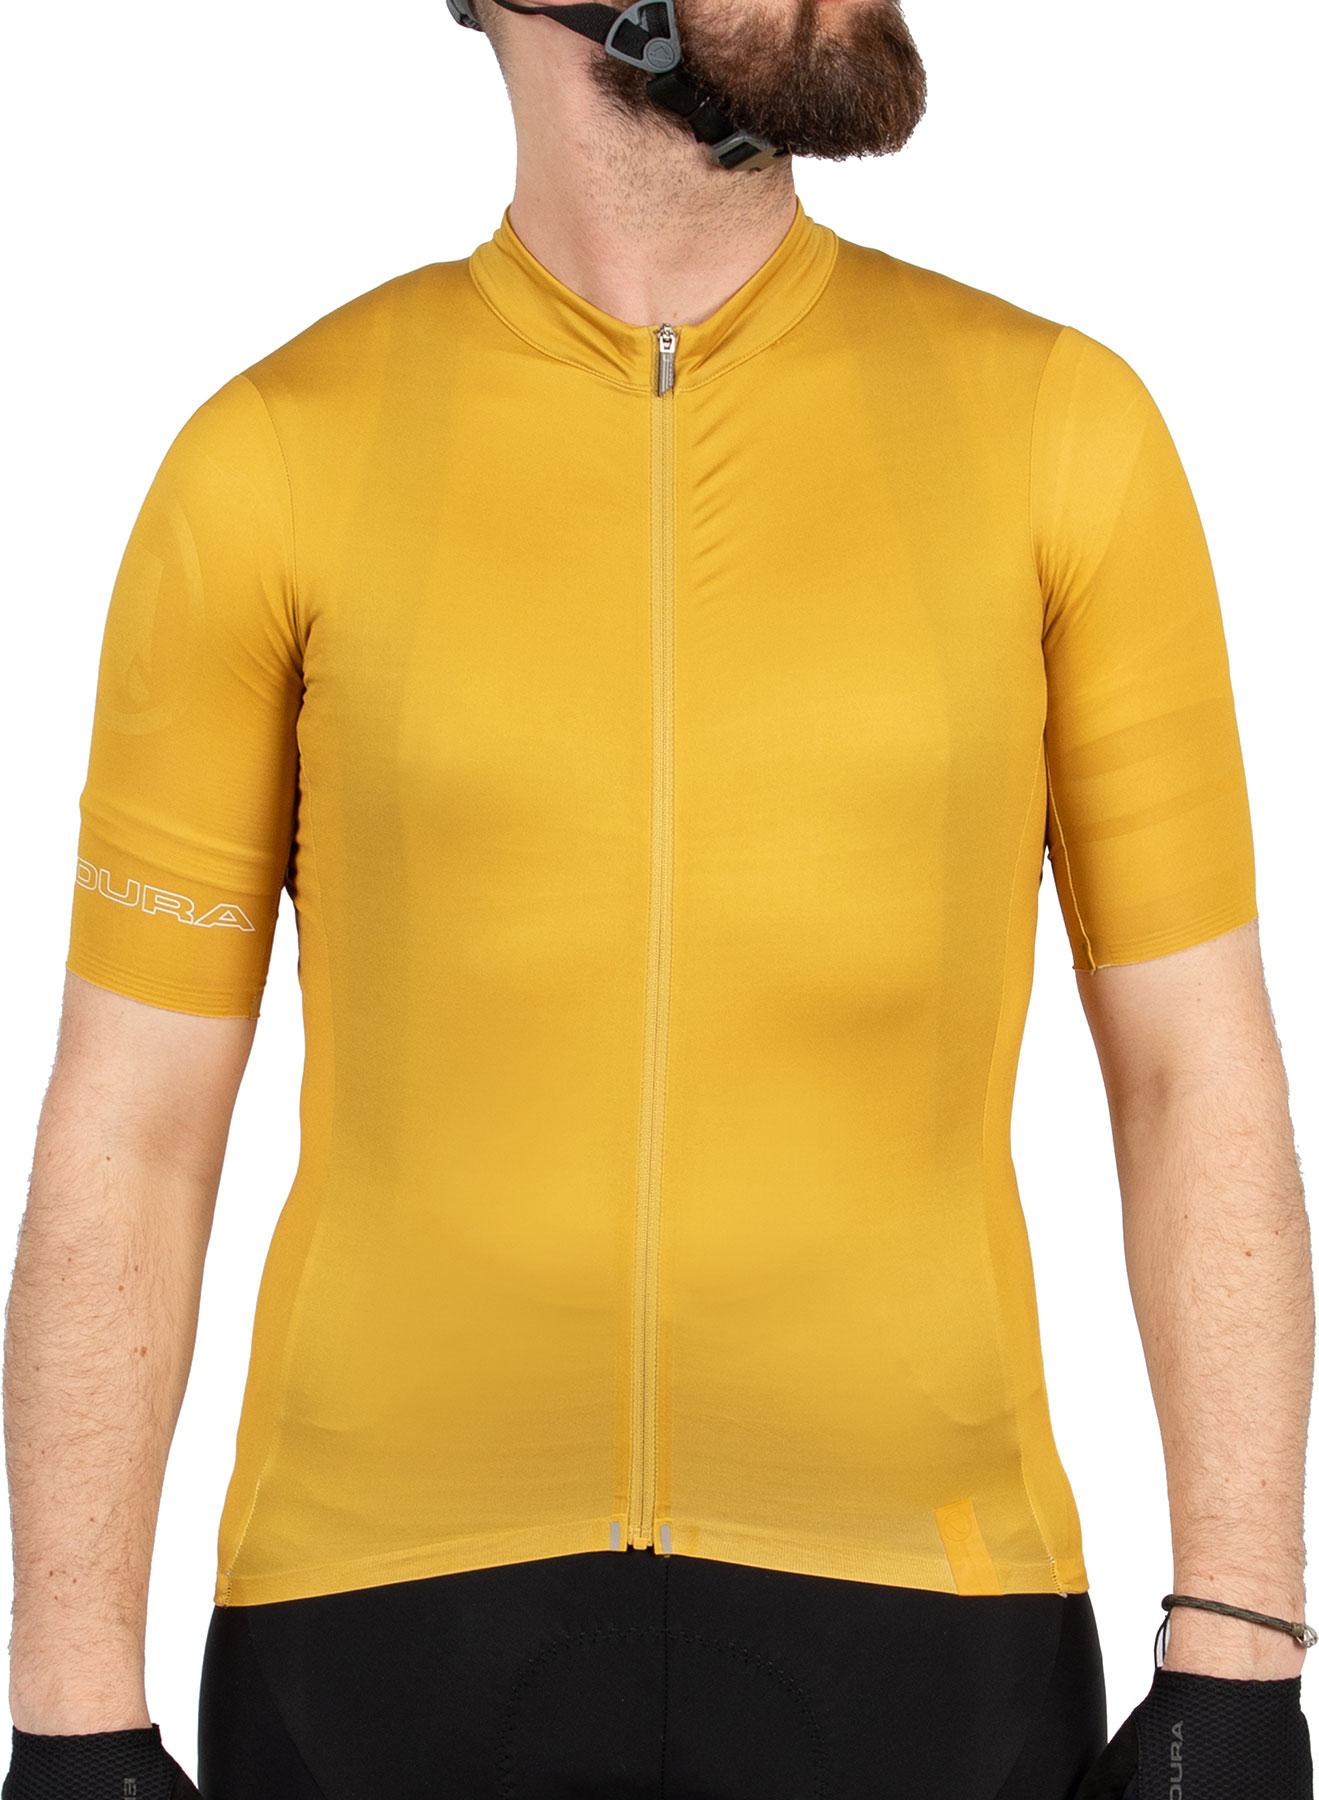 Endura Pro Sl Short Sleeve Cycling Jersey - Mustard